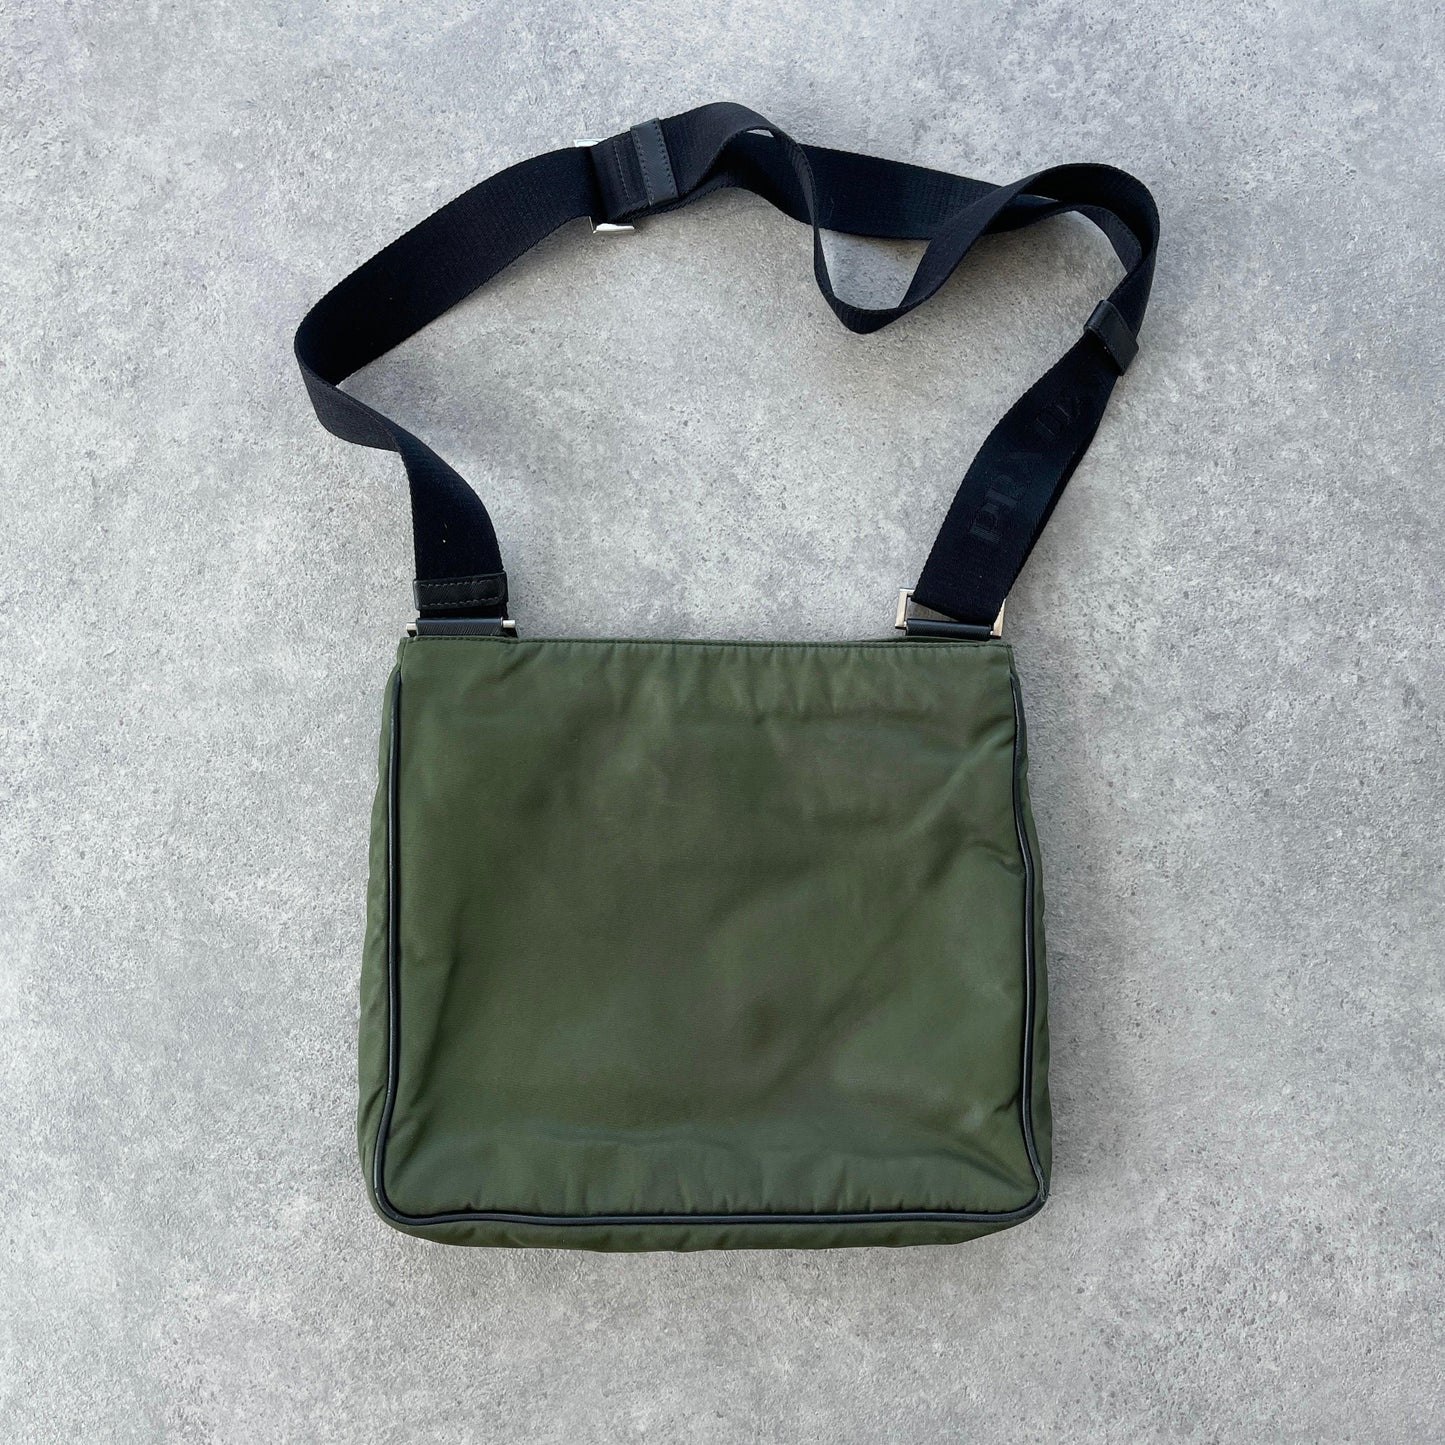 Prada Milano 2000s cross body nylon bag (12”x11”x2”) - Known Source